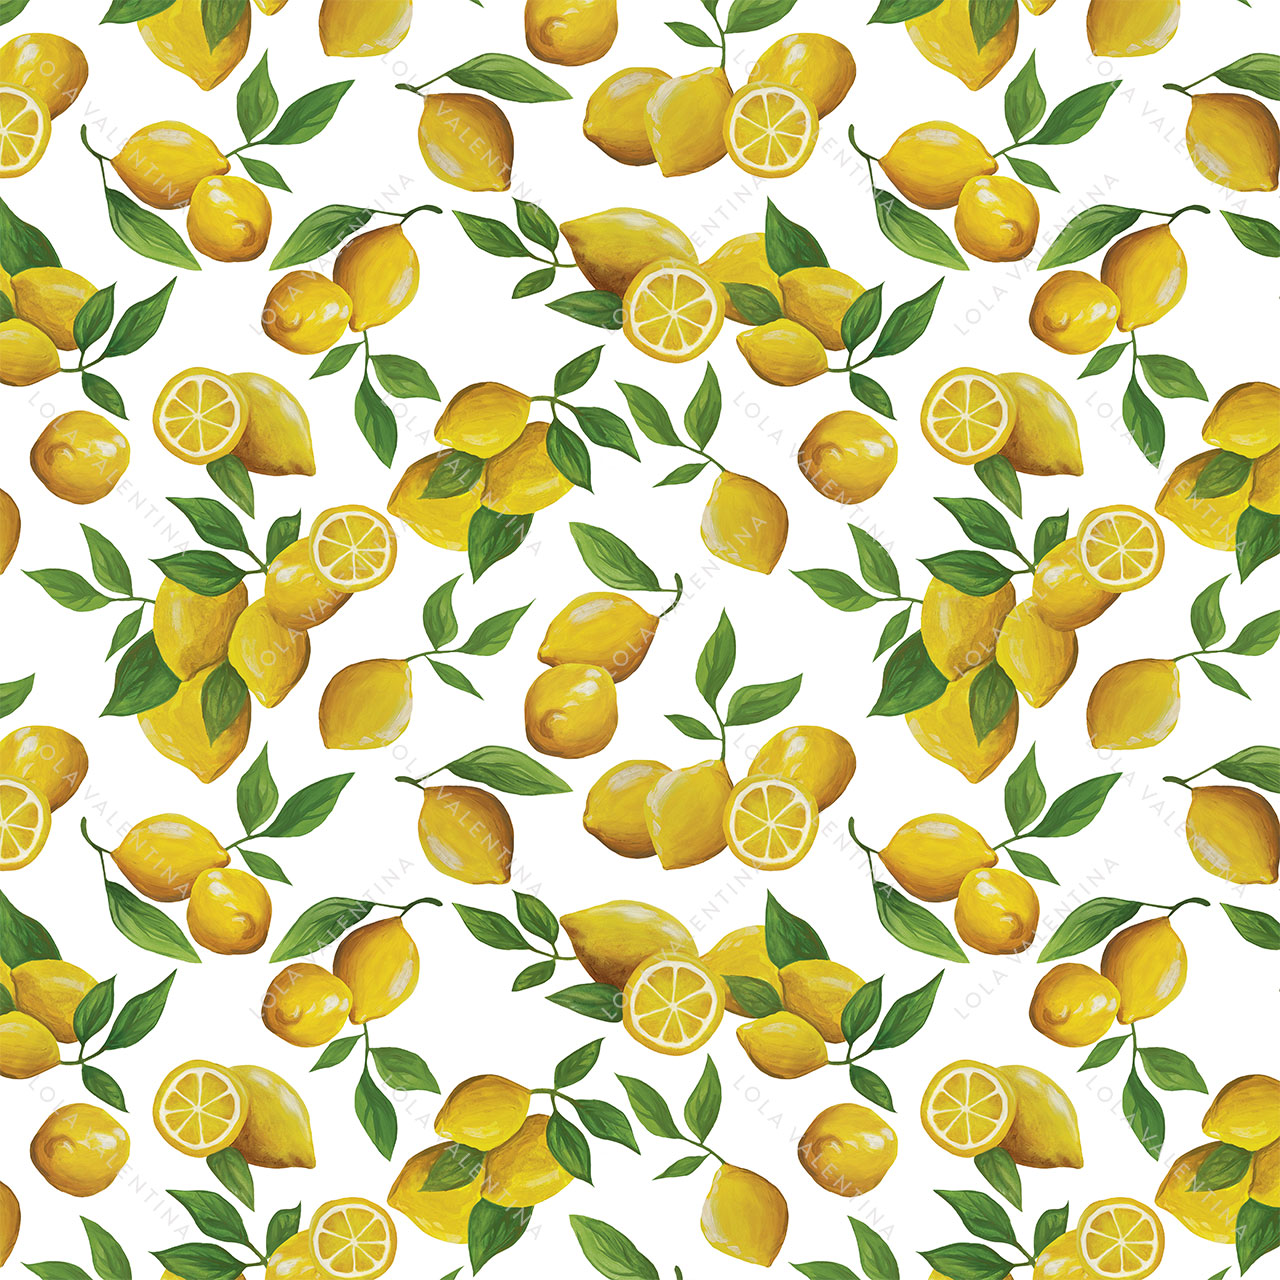 Lemons-Fruits-Citrus-Pattern